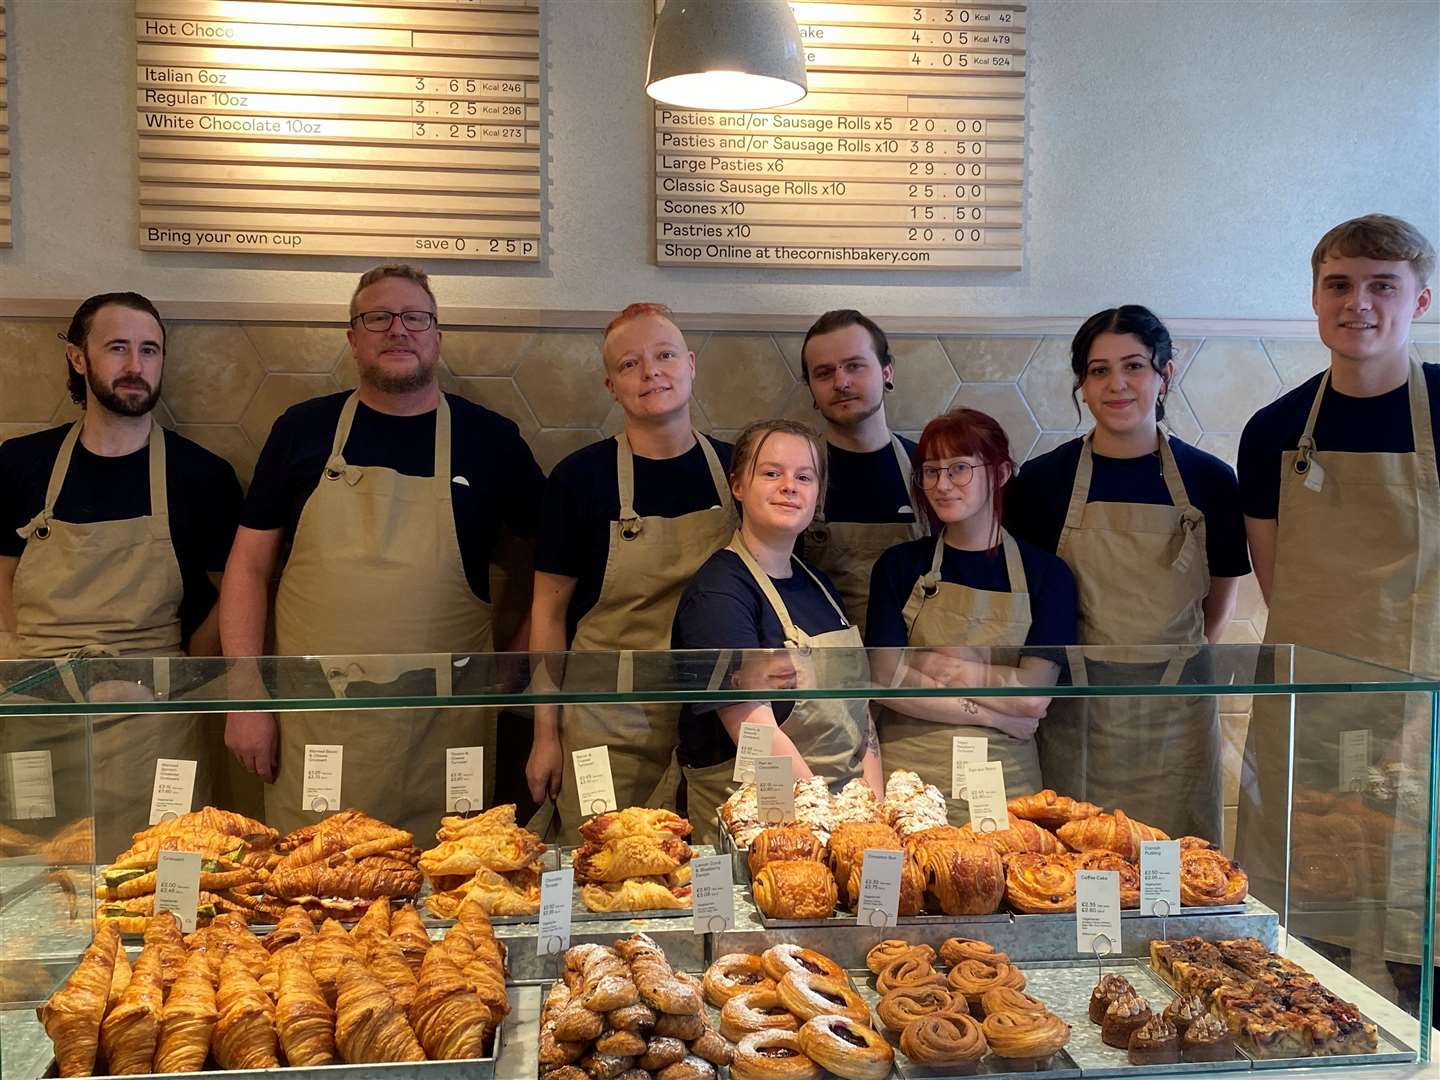 The staff at Cornish Bakery